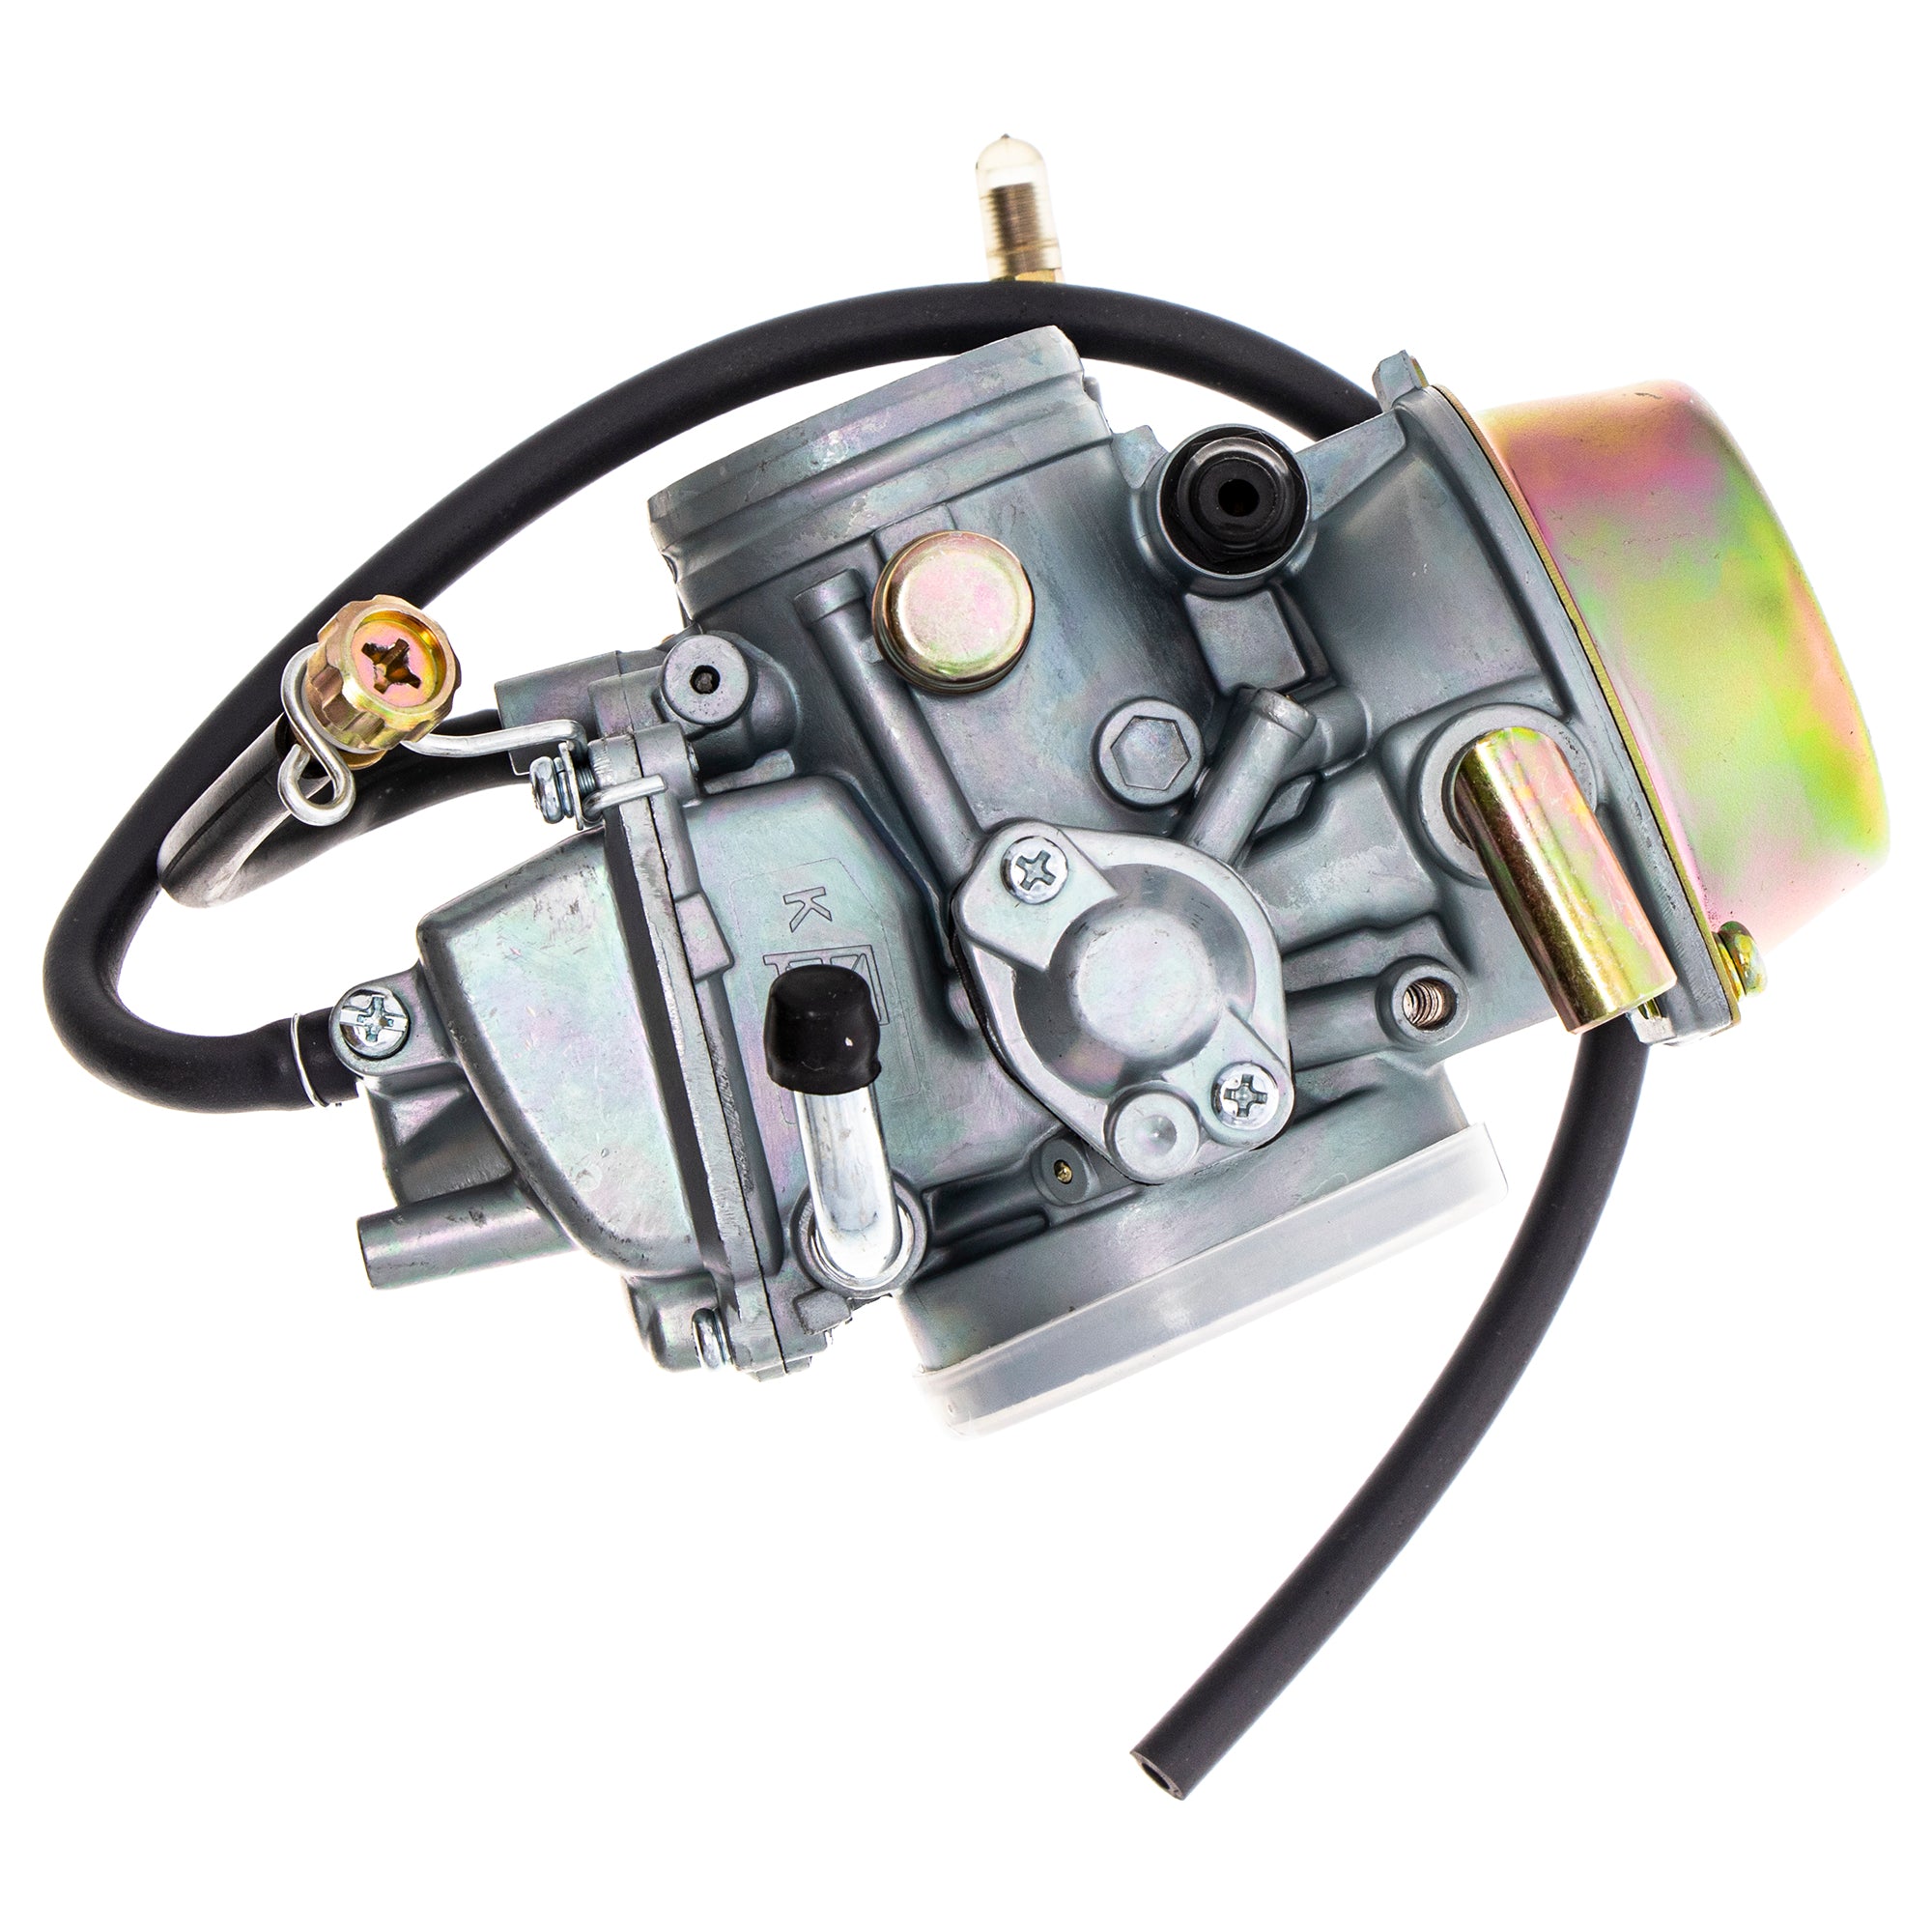 Carburetor & Fuel Pump Kit for Polaris Outlaw Predator 500 2520227